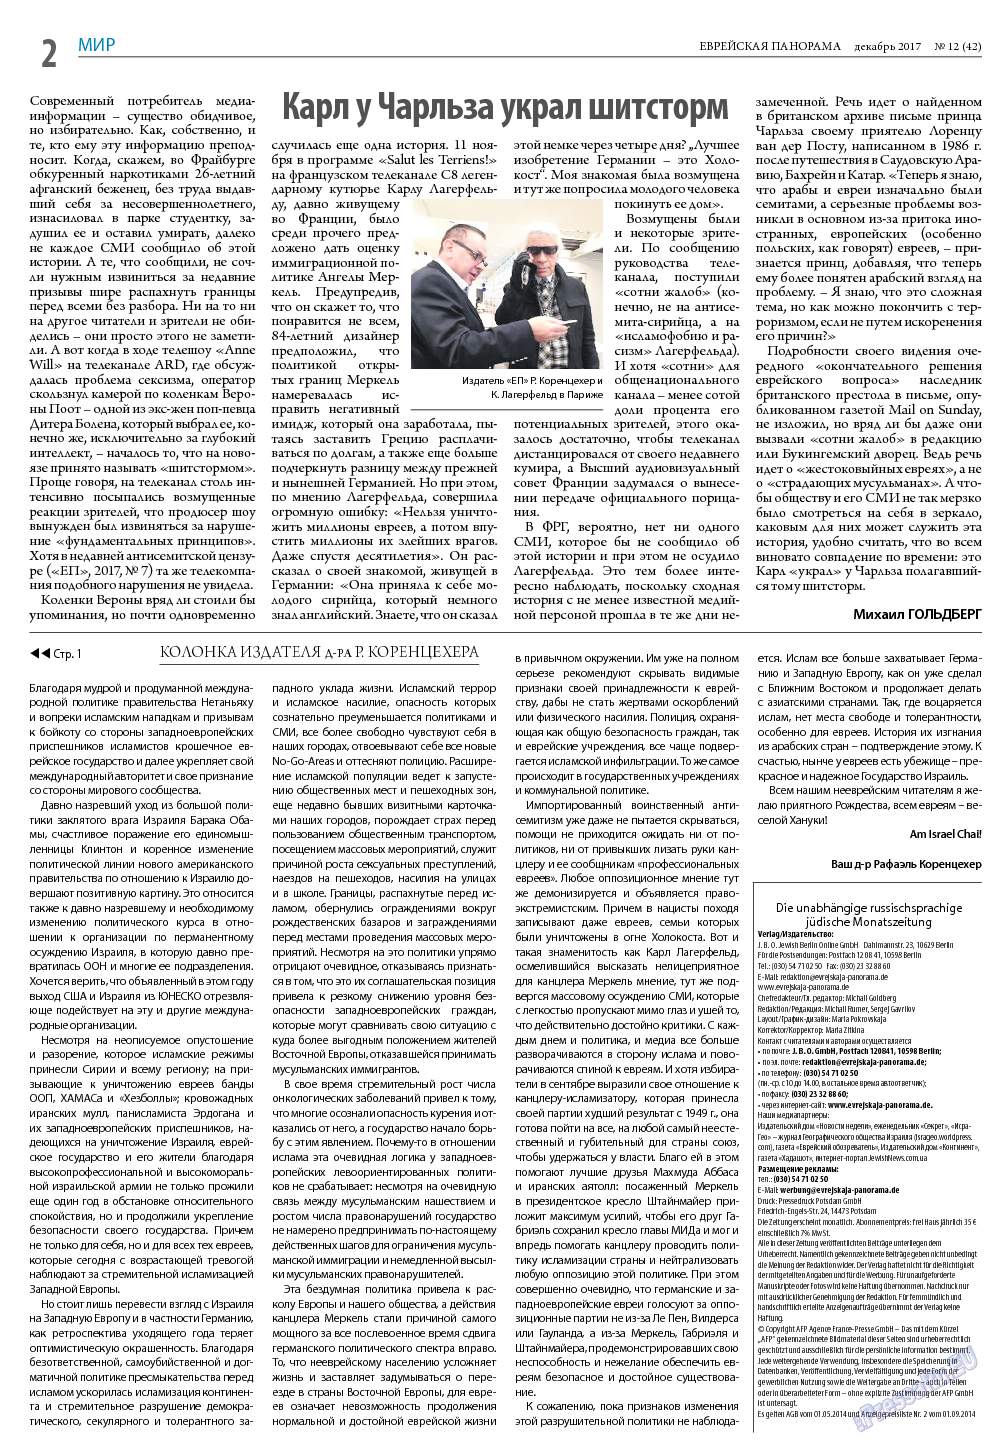 Еврейская панорама, газета. 2017 №12 стр.2